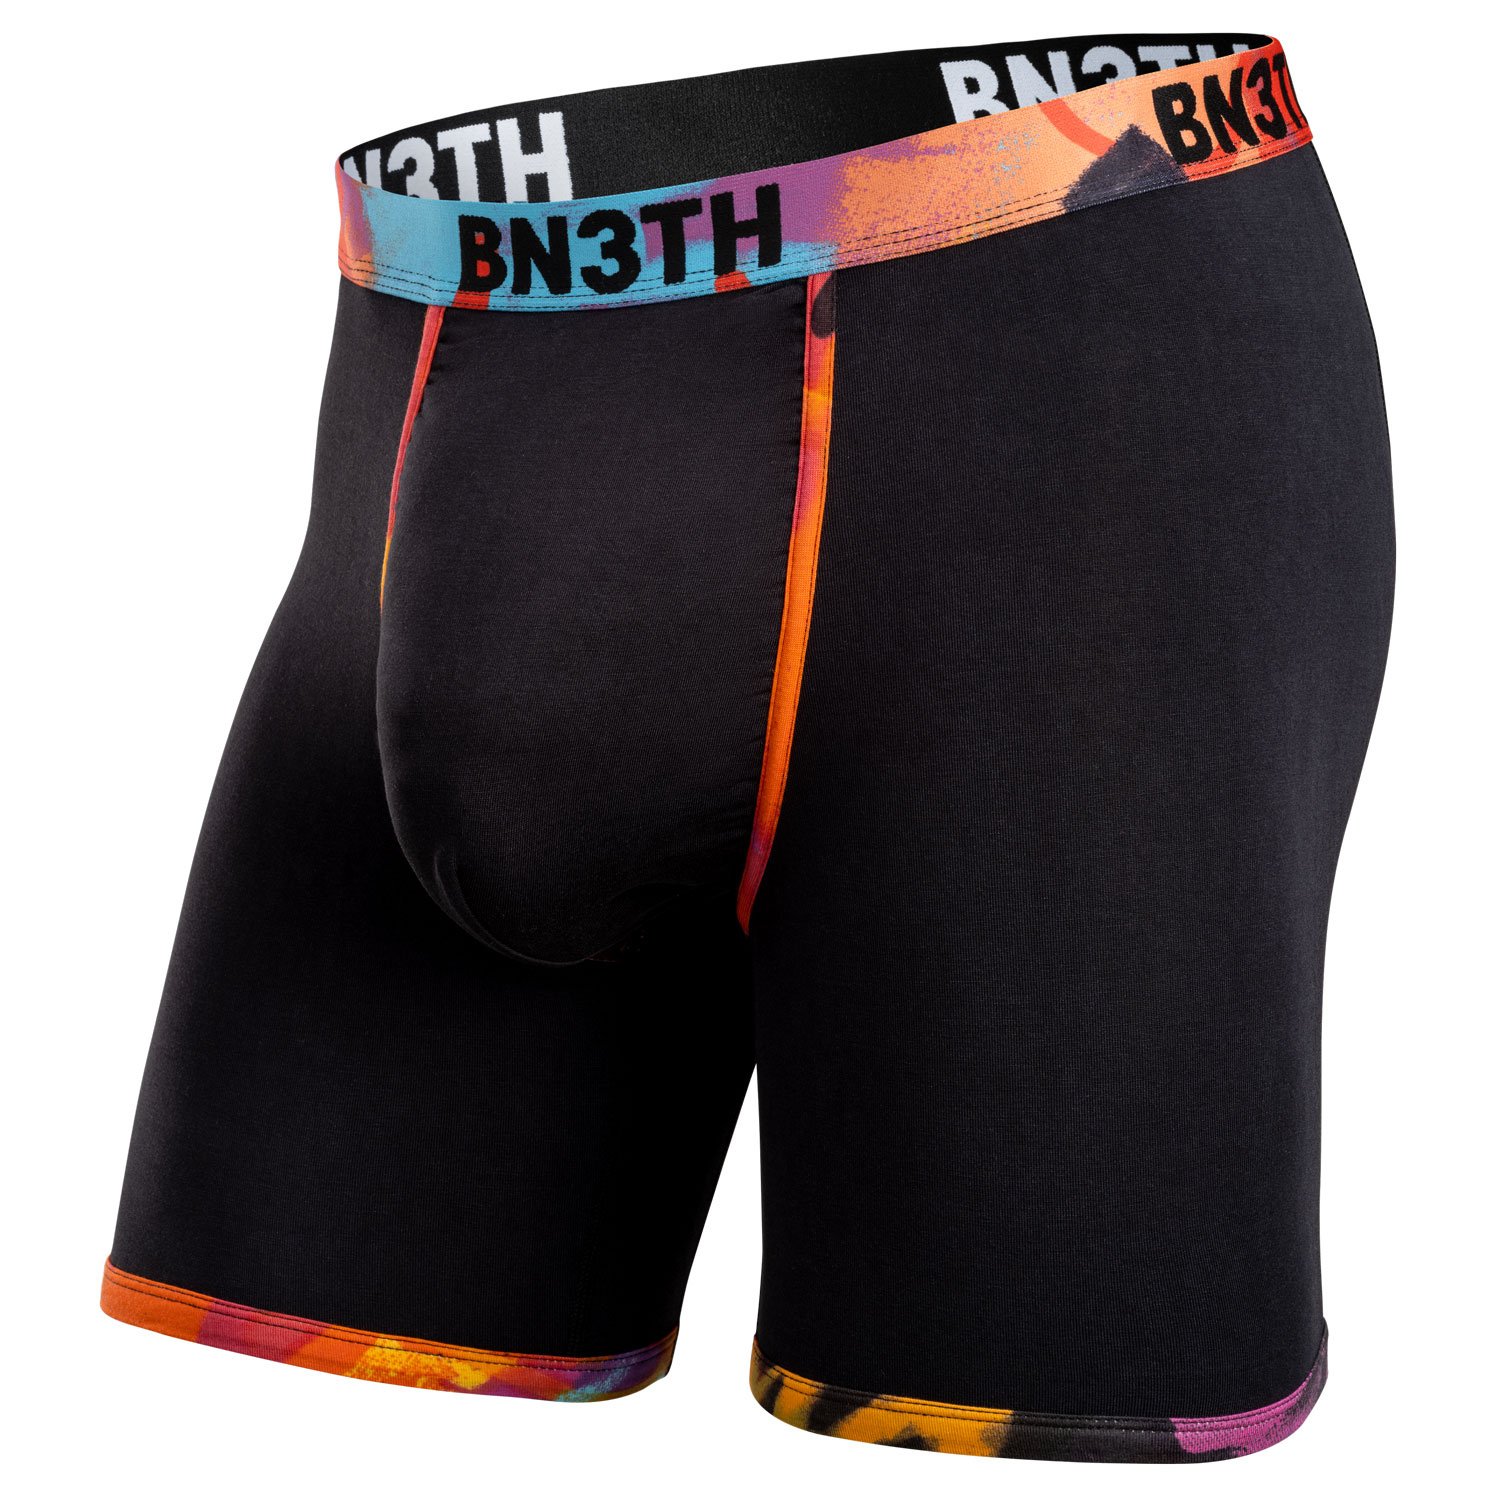 BN3TH - Classic Brief - Solid Black